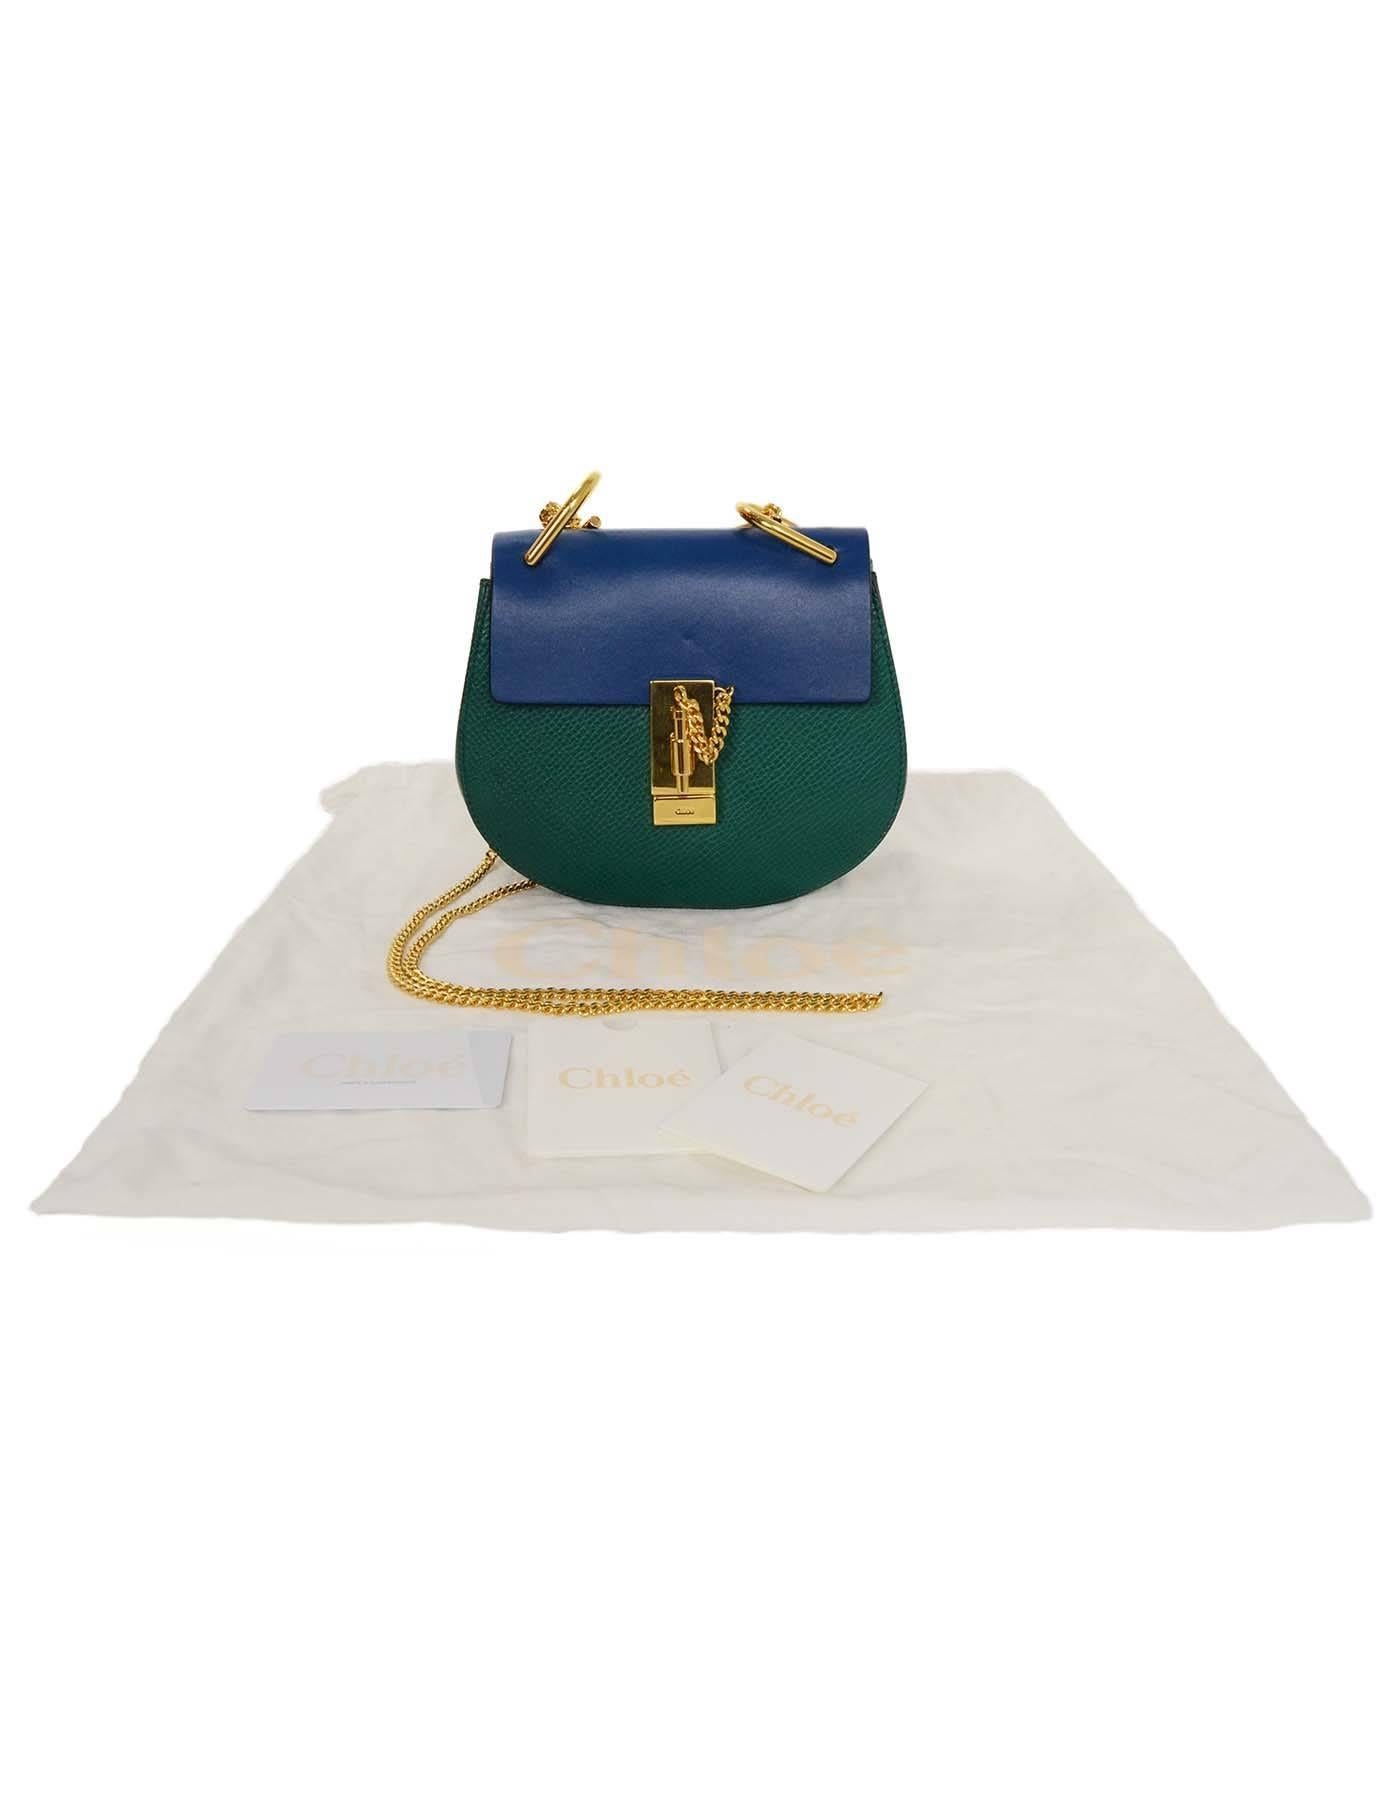 Chloe Blue and Green Bicolor Drew Small Crossbody Bag GHW rt. $1, 950 5